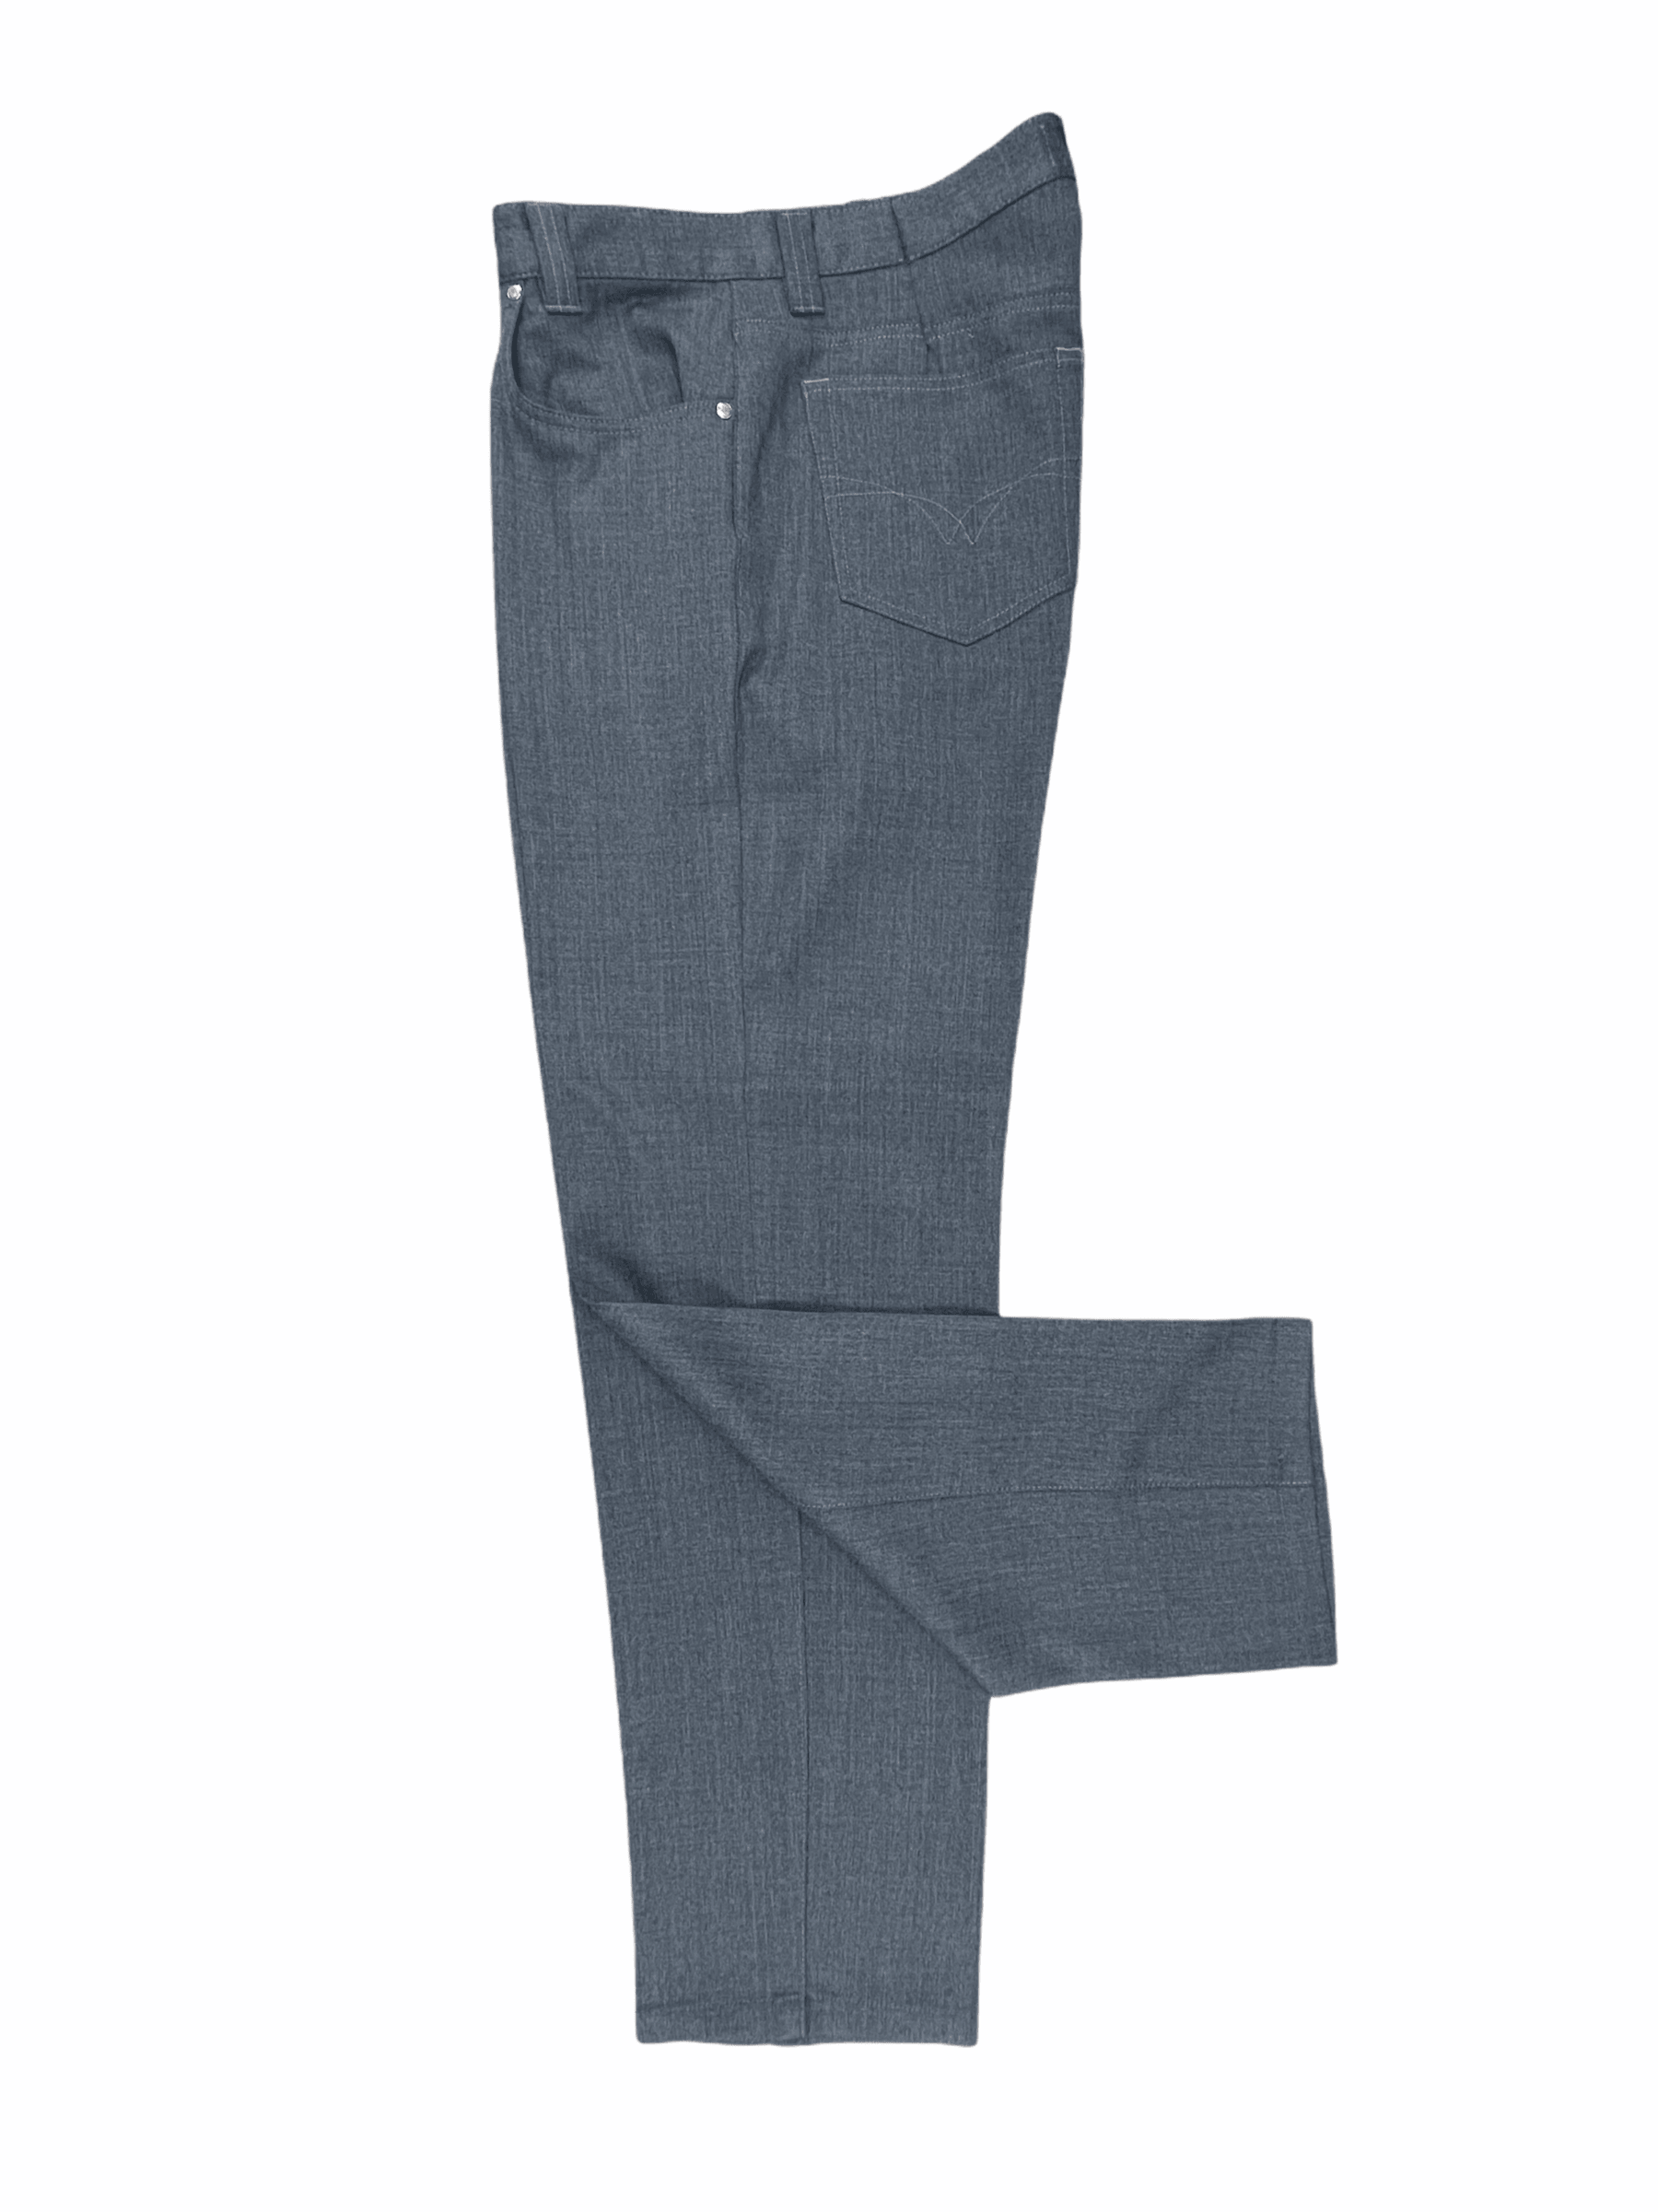 Versace Grey Wool 5 Pocket Dress Pants 36W 32L Large—Genuine Design luxury consignment